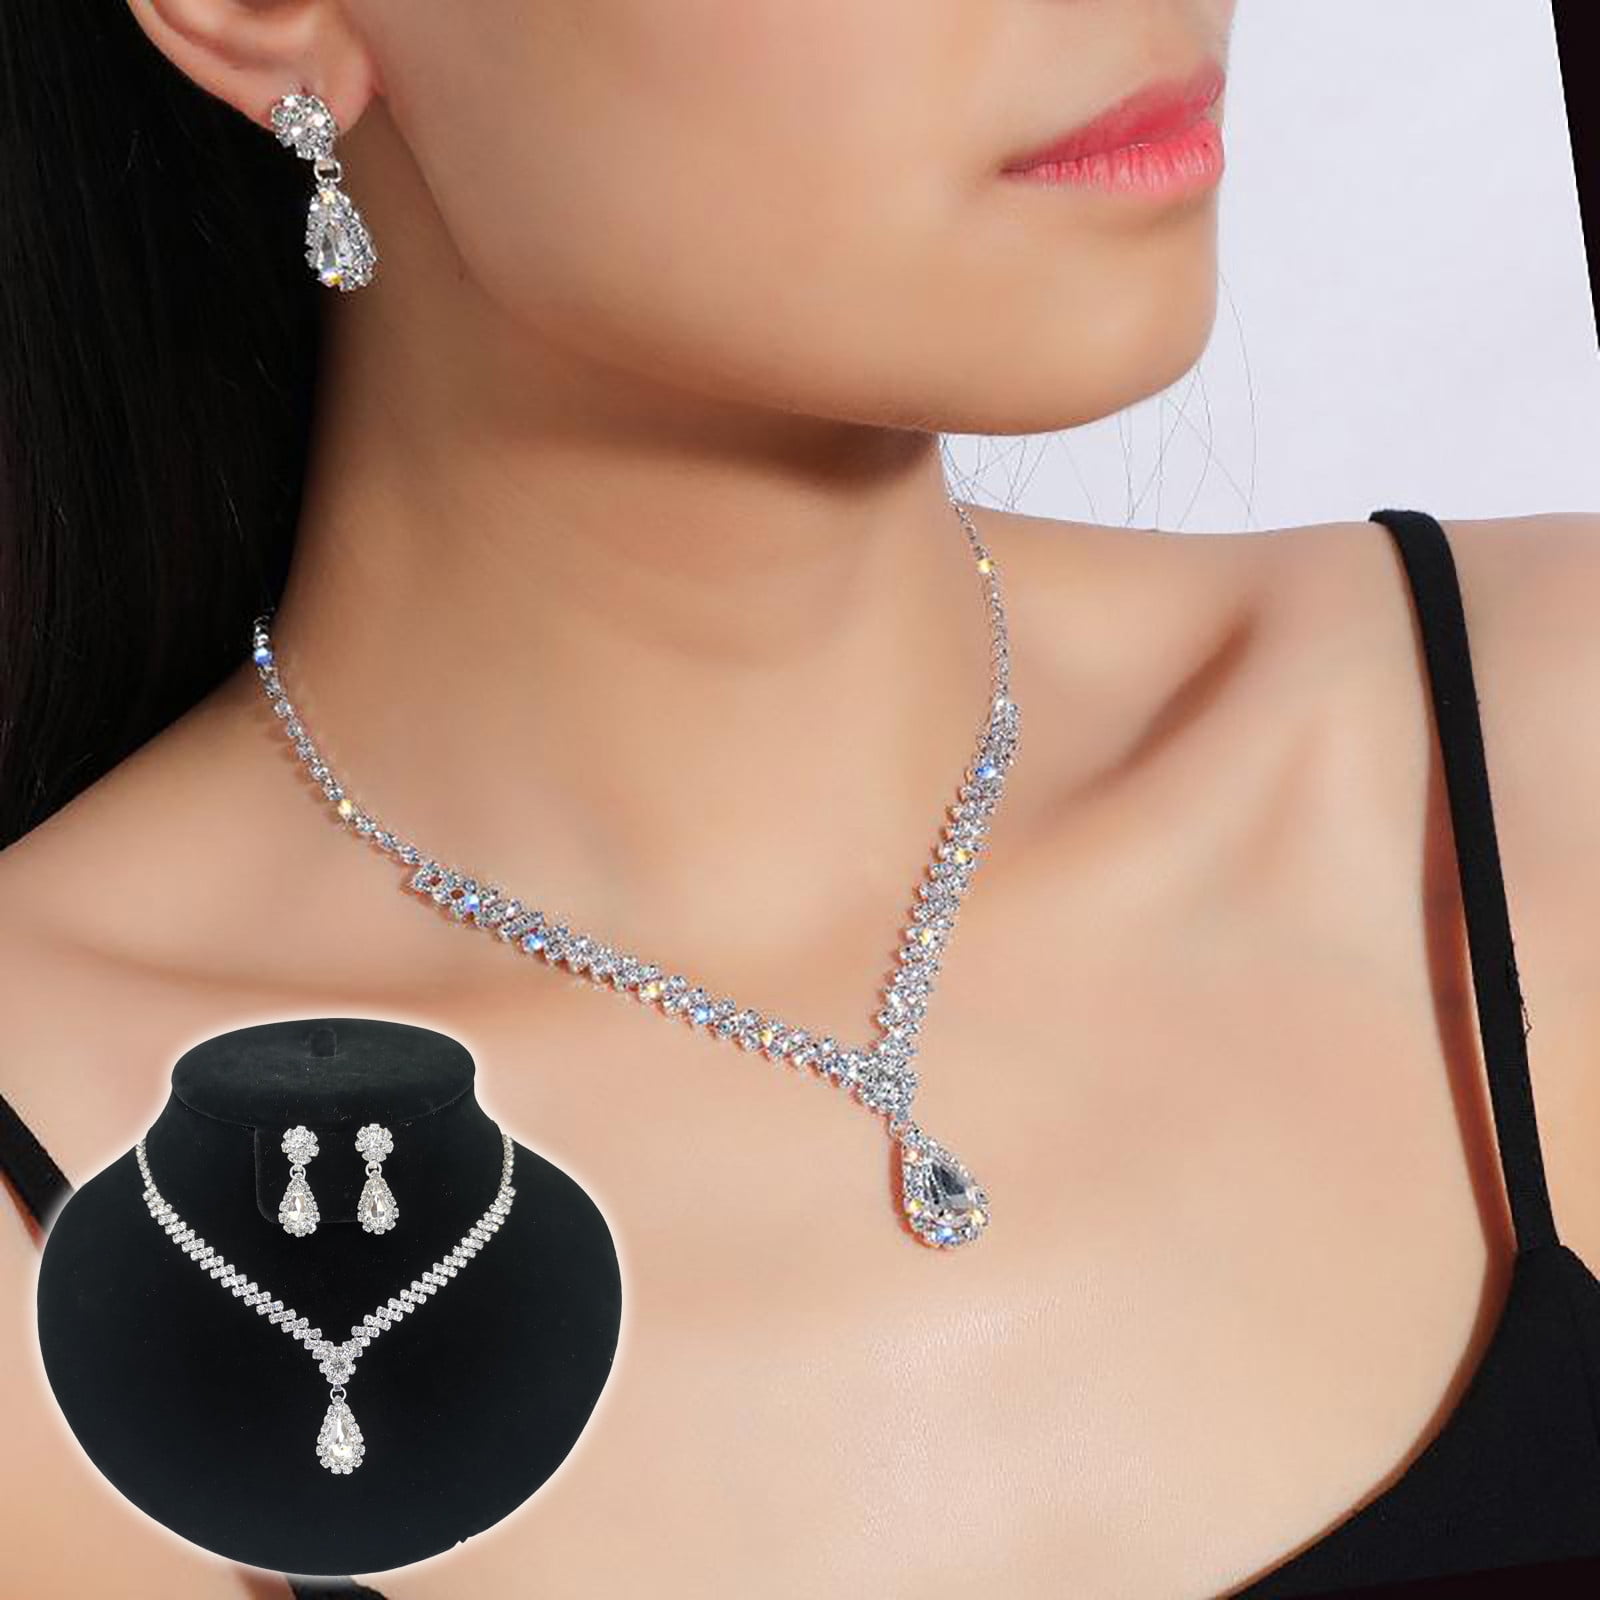 Wedding Diamond Necklace in Bangalore at best price by Sambav Diamond -  Justdial